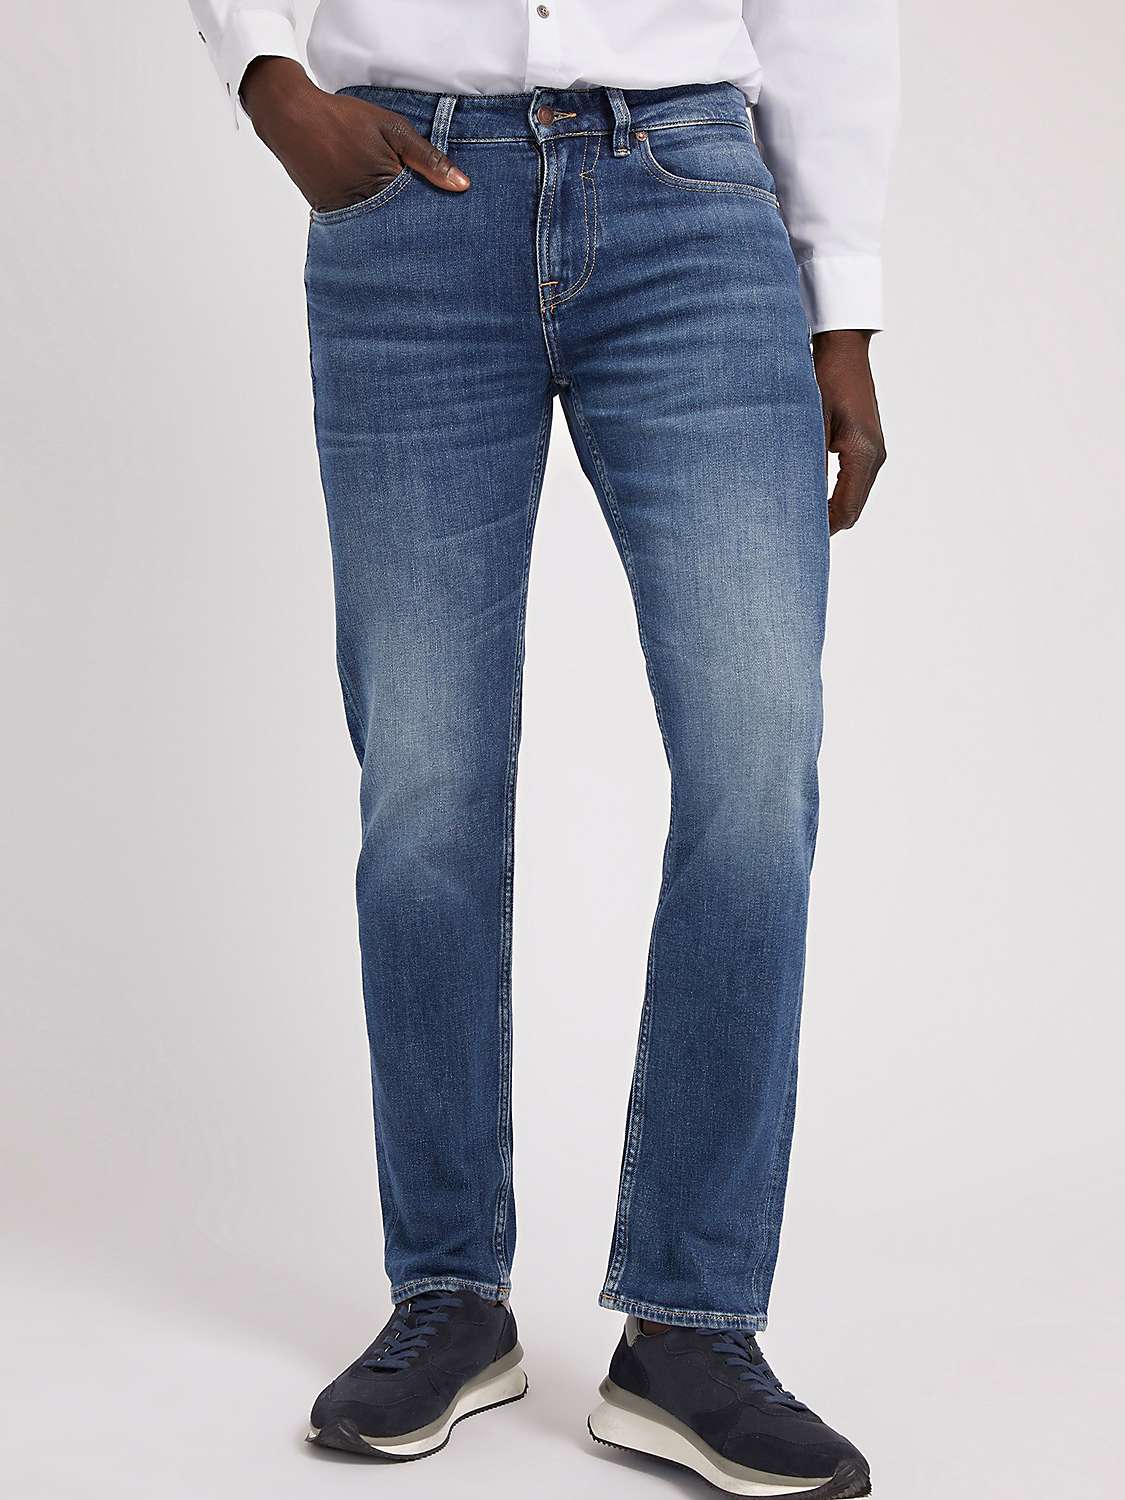 Buy GUESS Angels Slim Fit Denim Jeans, Carry Mid. Online at johnlewis.com